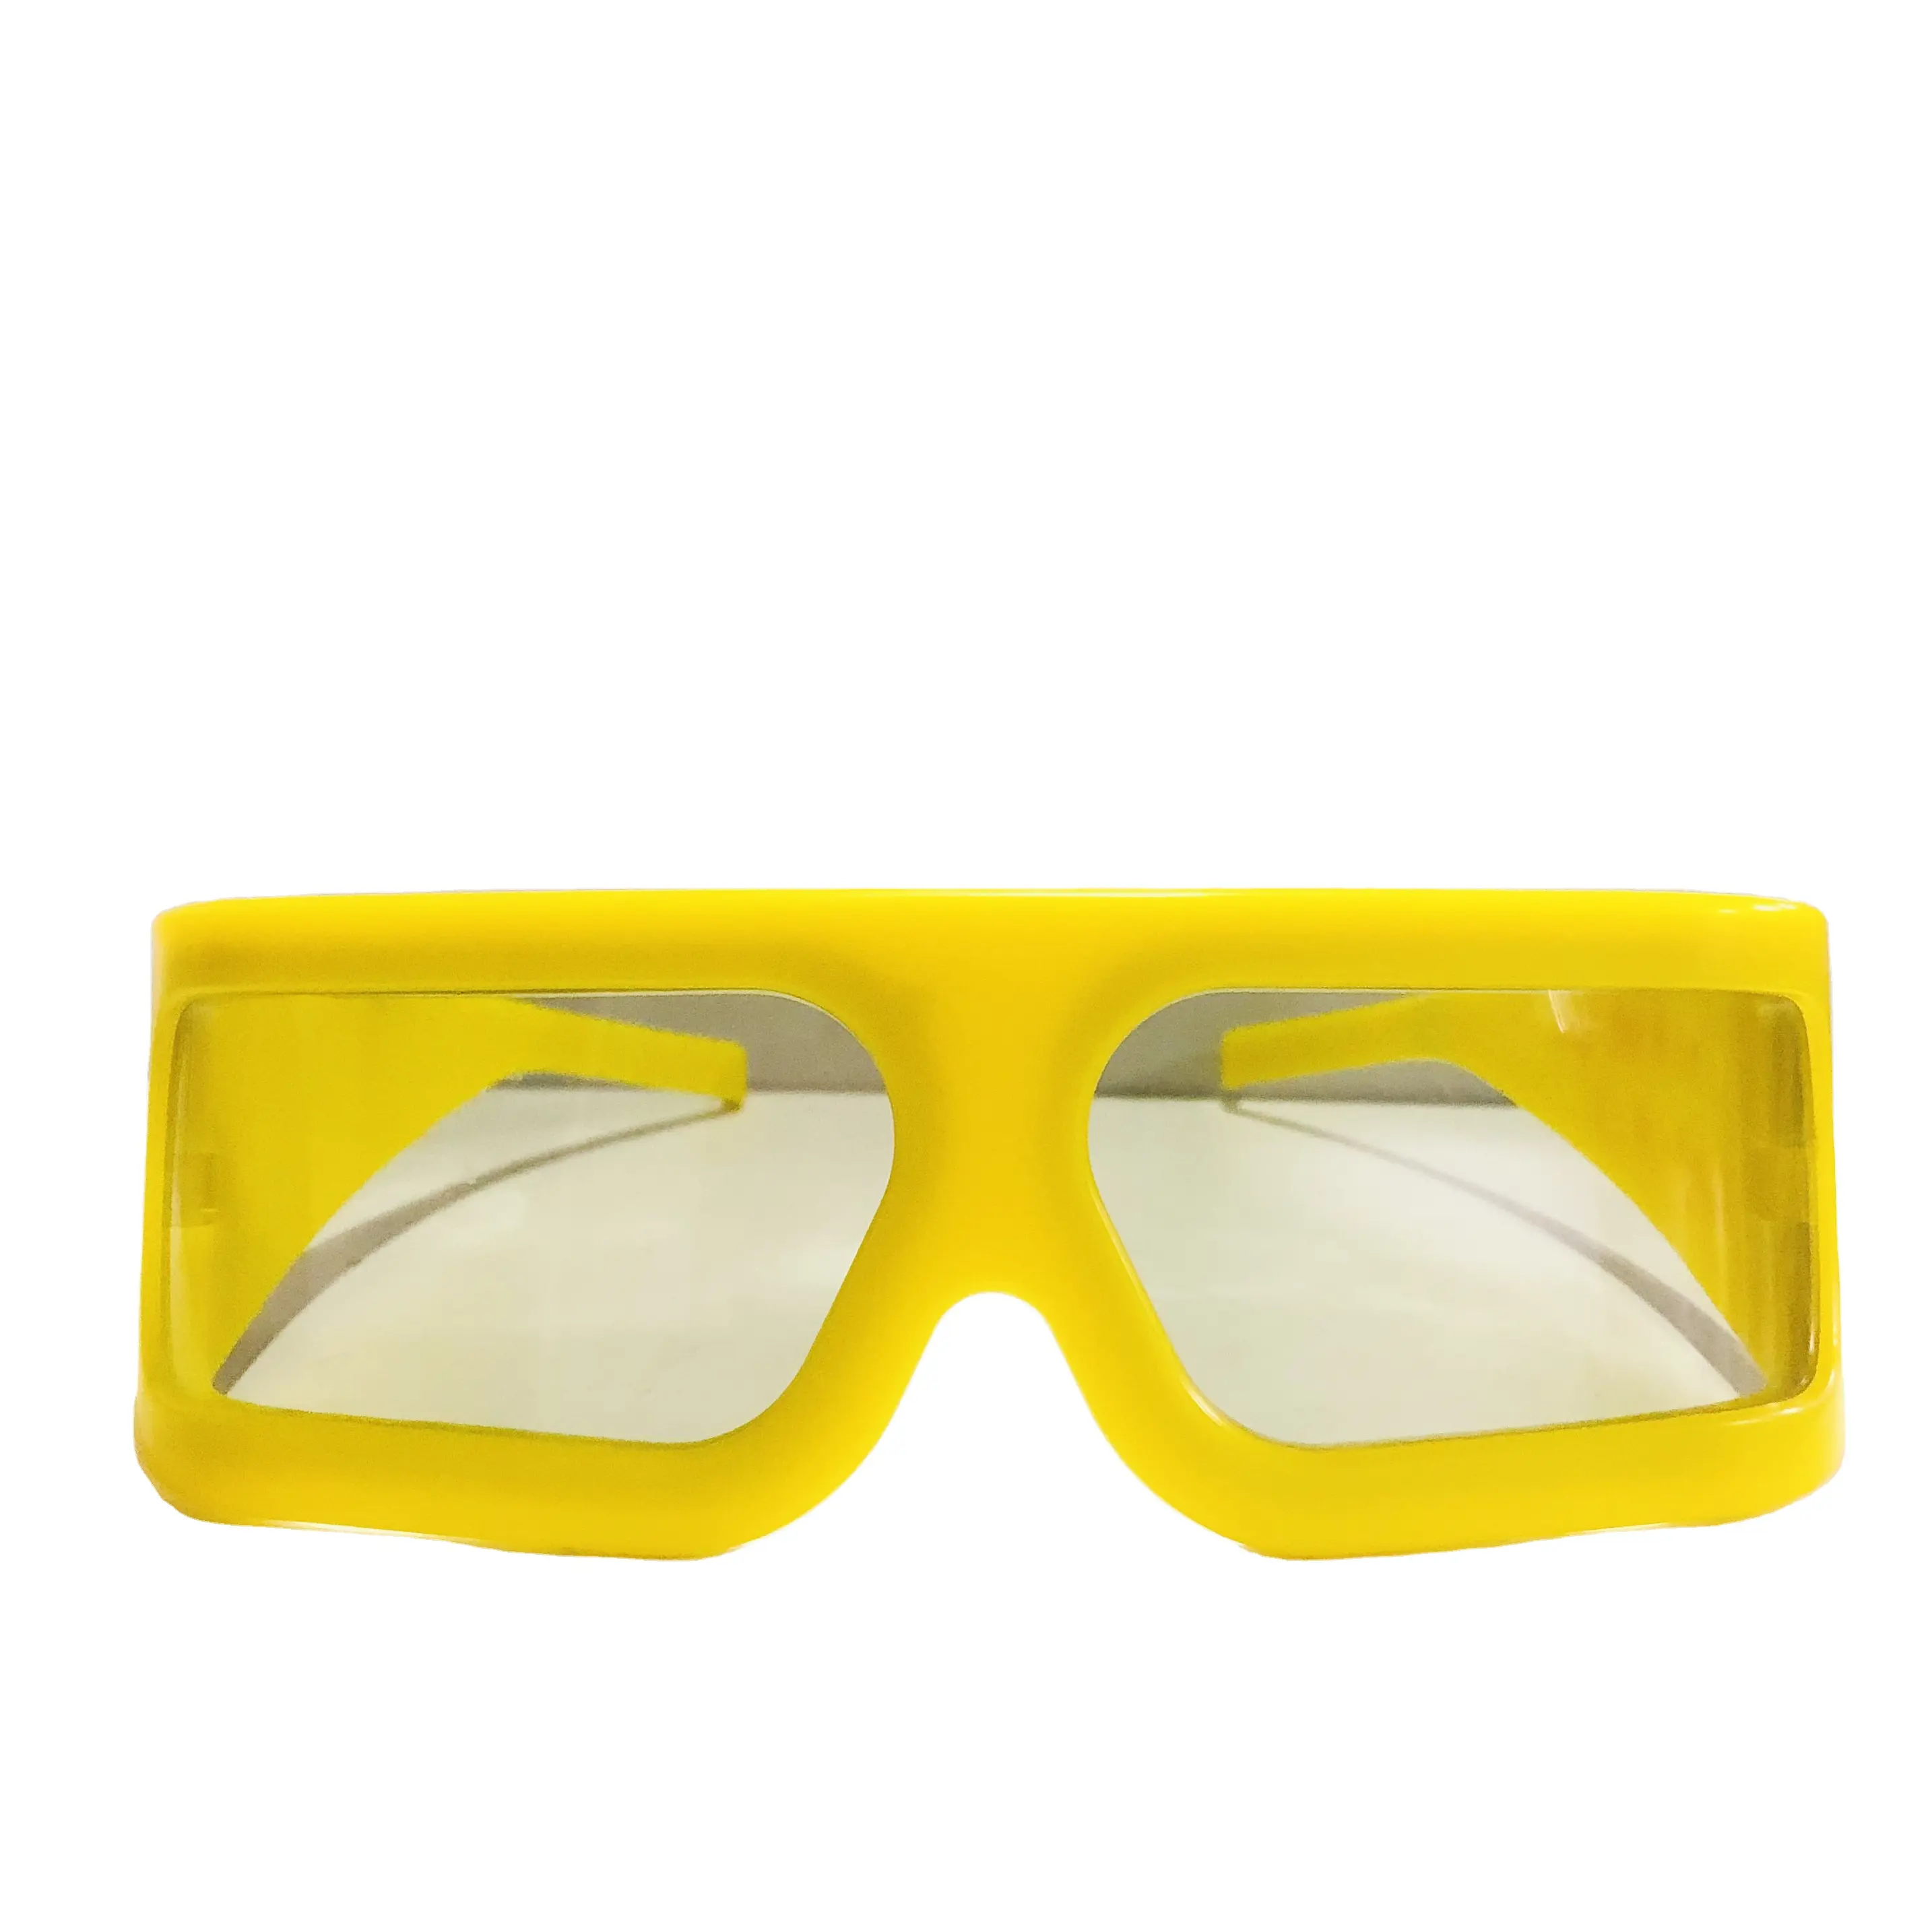 Theater 4D 5D 7D Lineare oder kreisförmige polarisierte 3D-Brille